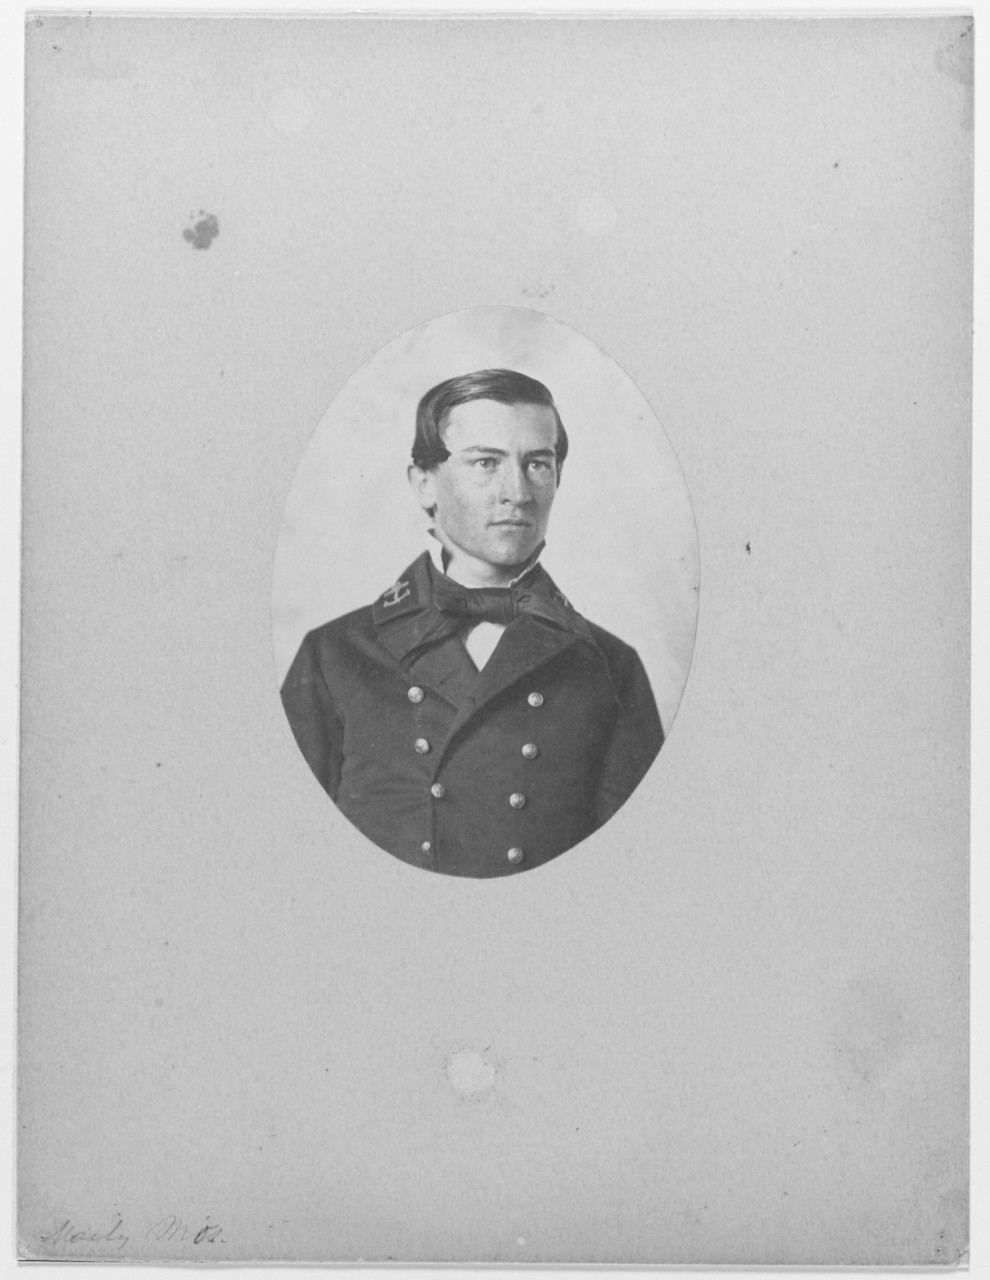 Midshipman James C. Moseley, USN